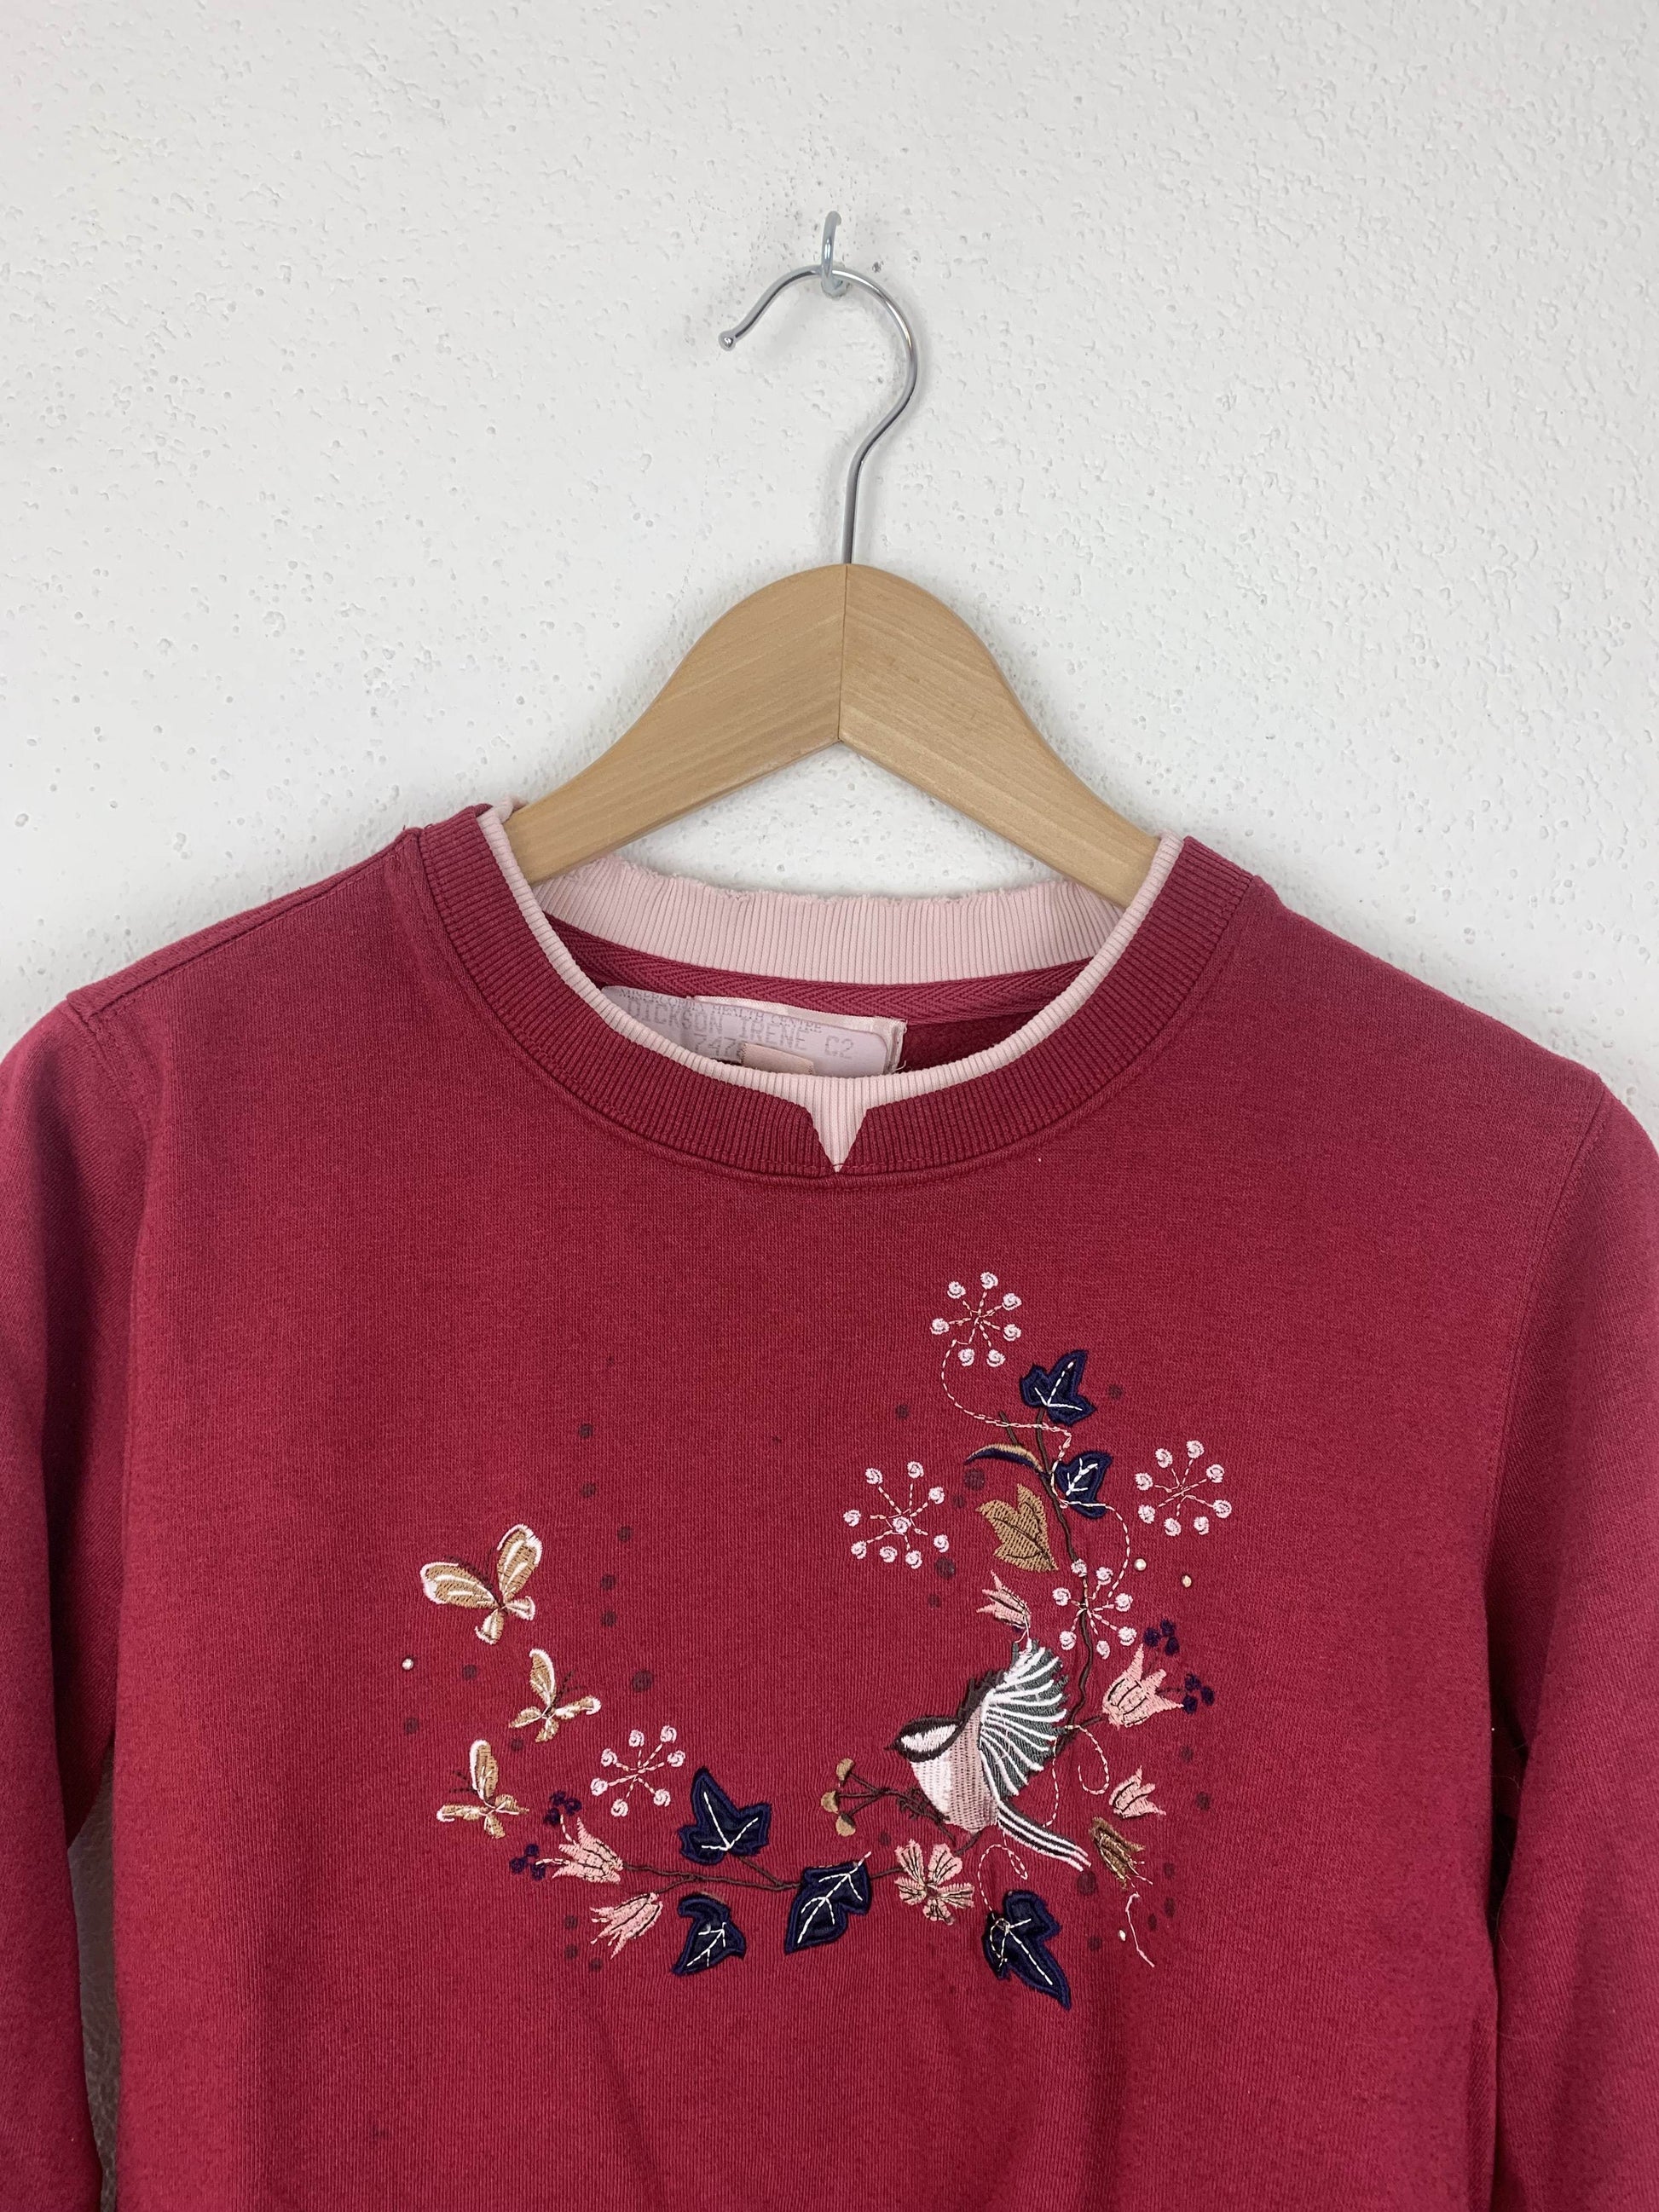 Vintage Sweater - XS.